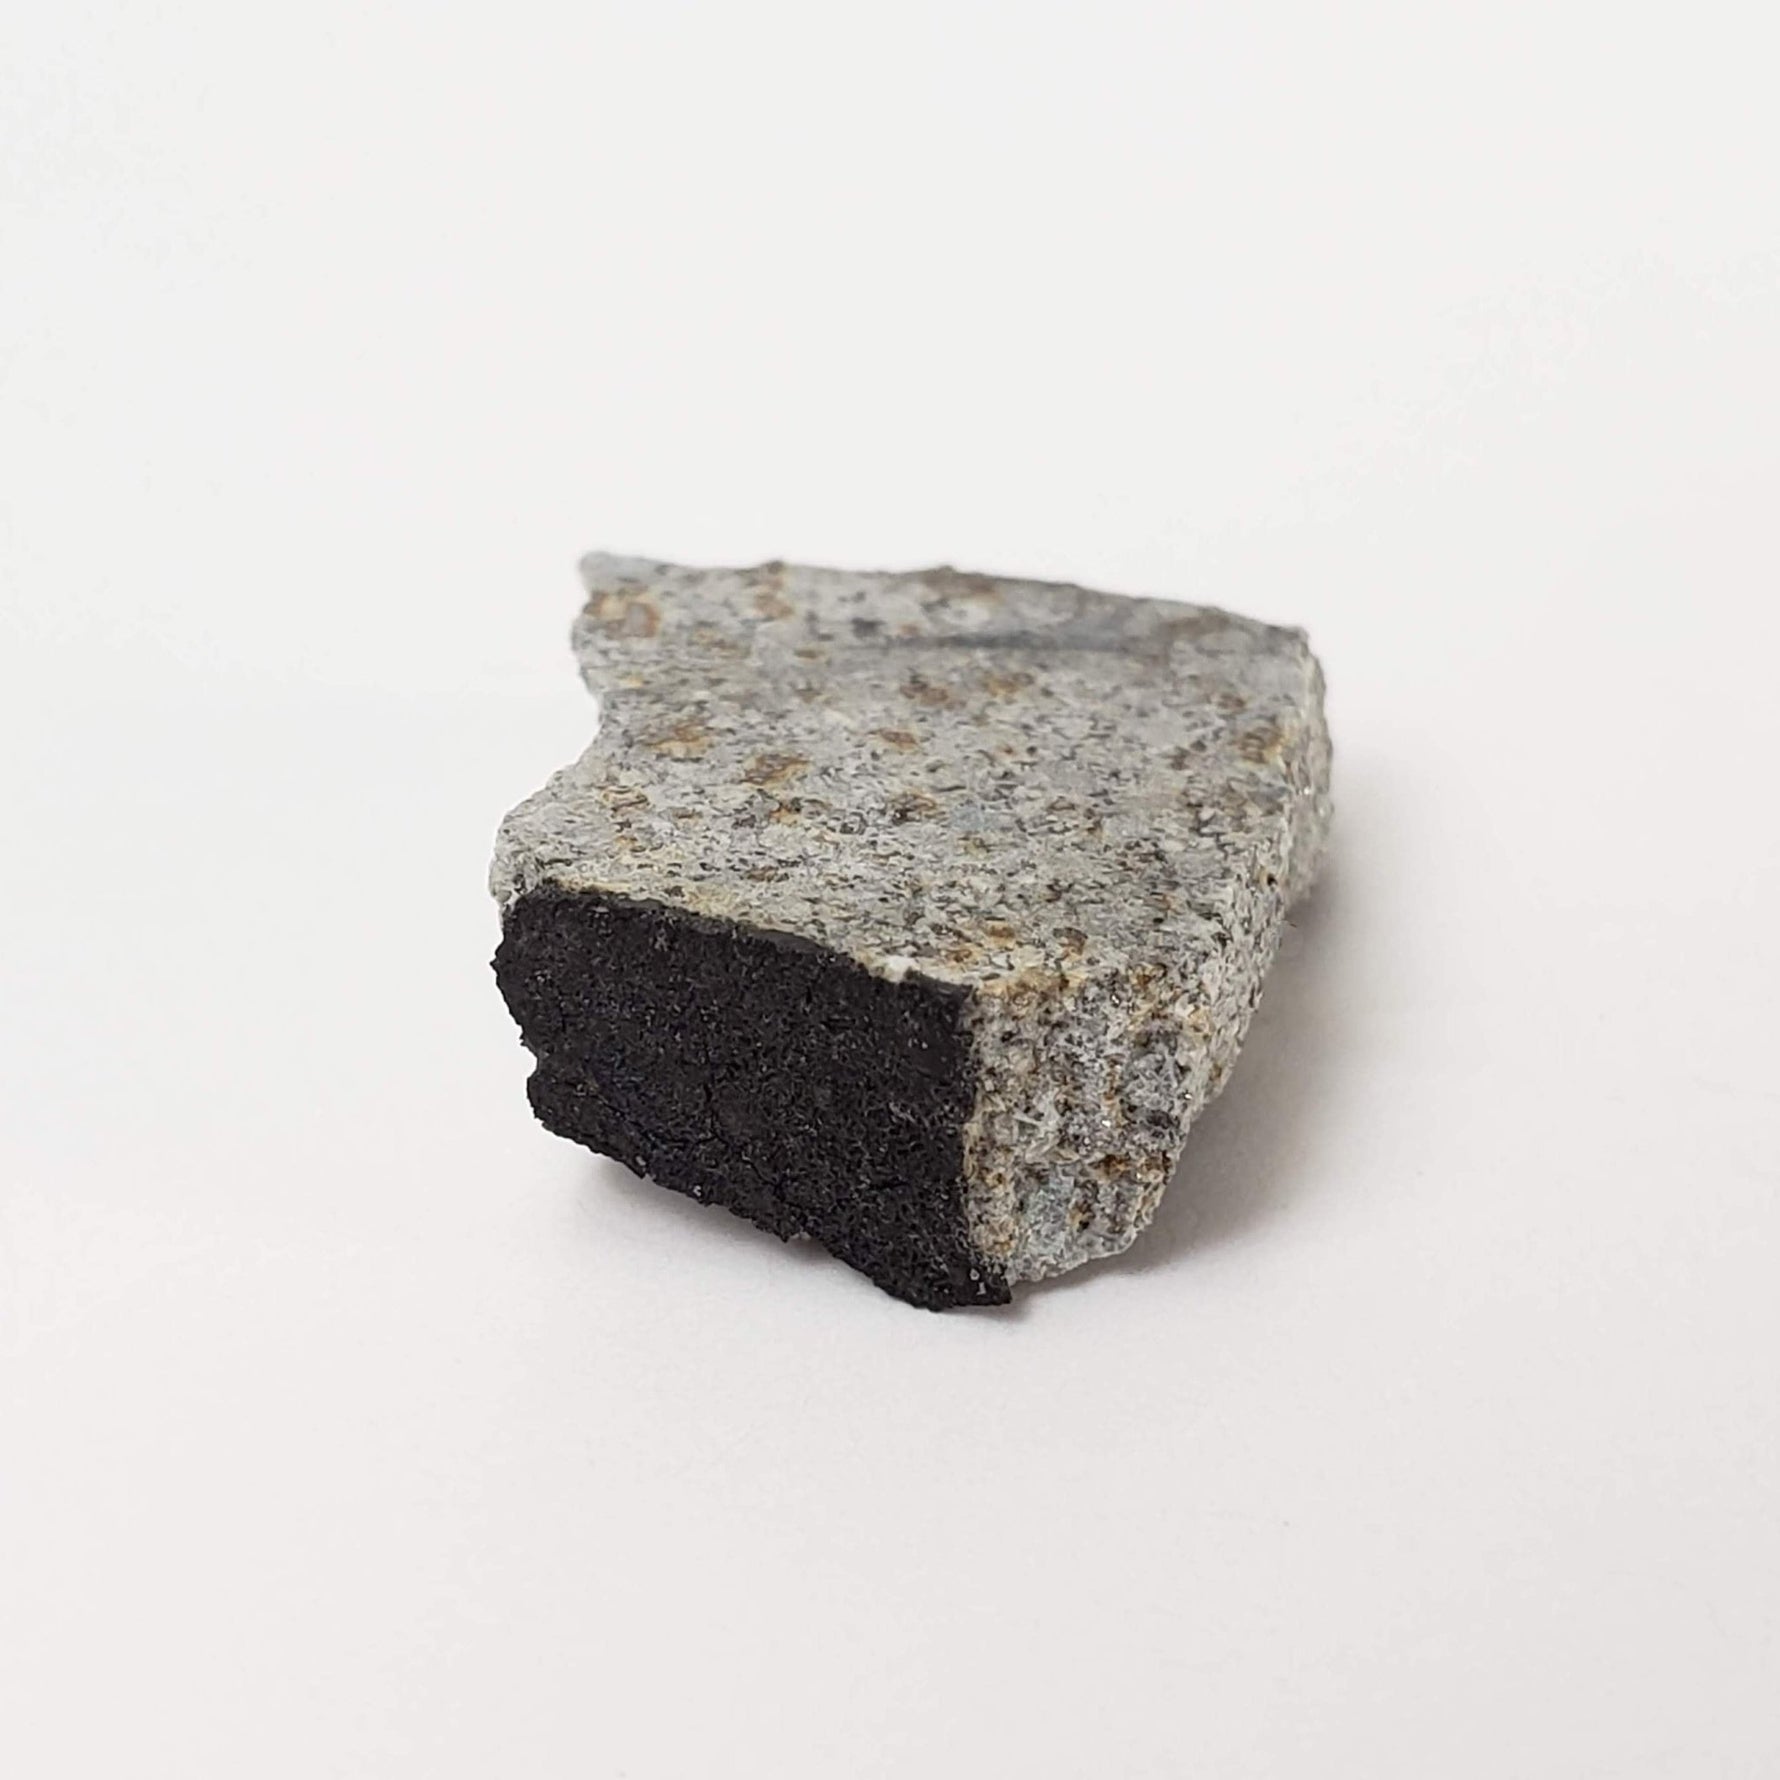 Bruderheim Meteorite | 1.88gr | Part Slice | L6 Class | Observed Fall 1960 Canada